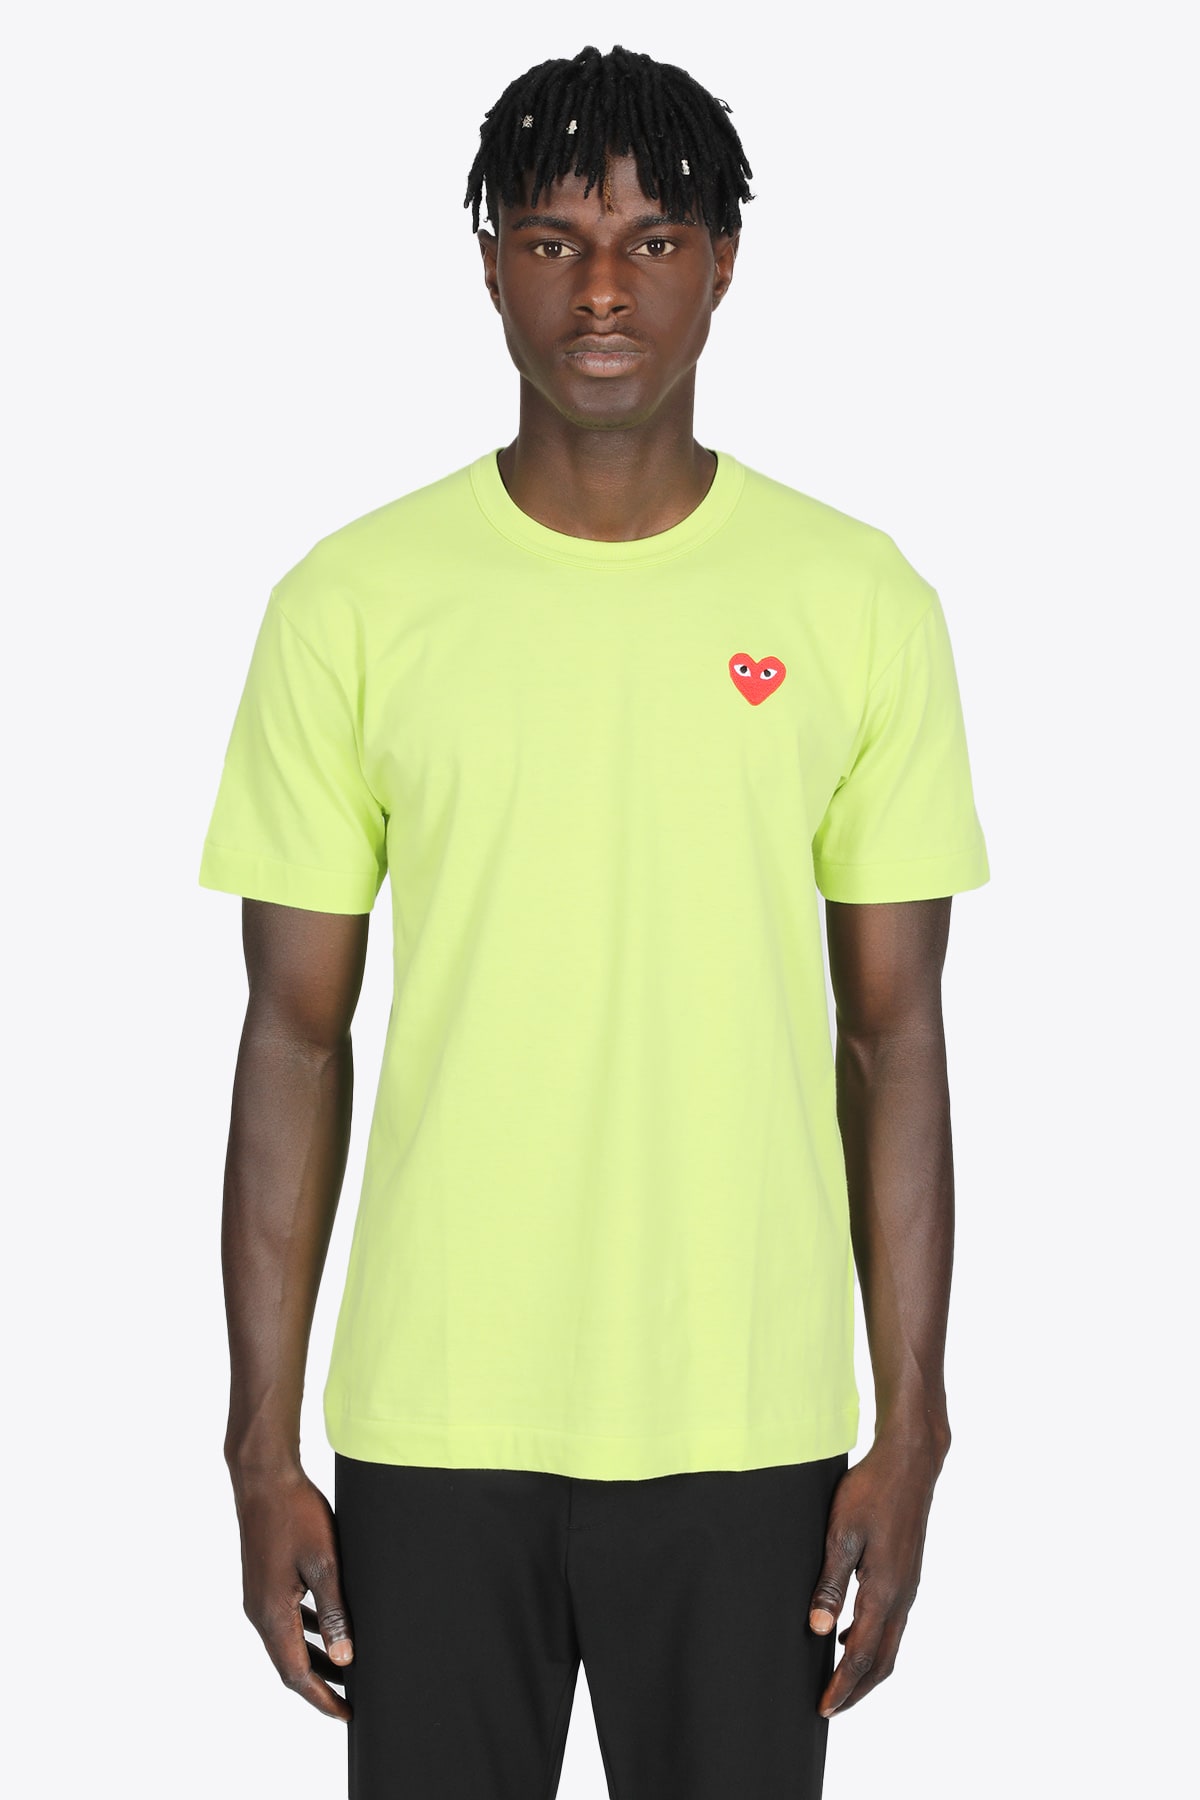 Comme des Garçons Play Heart Patch T-shirt Acid green cotton t-shirt with big heart patch